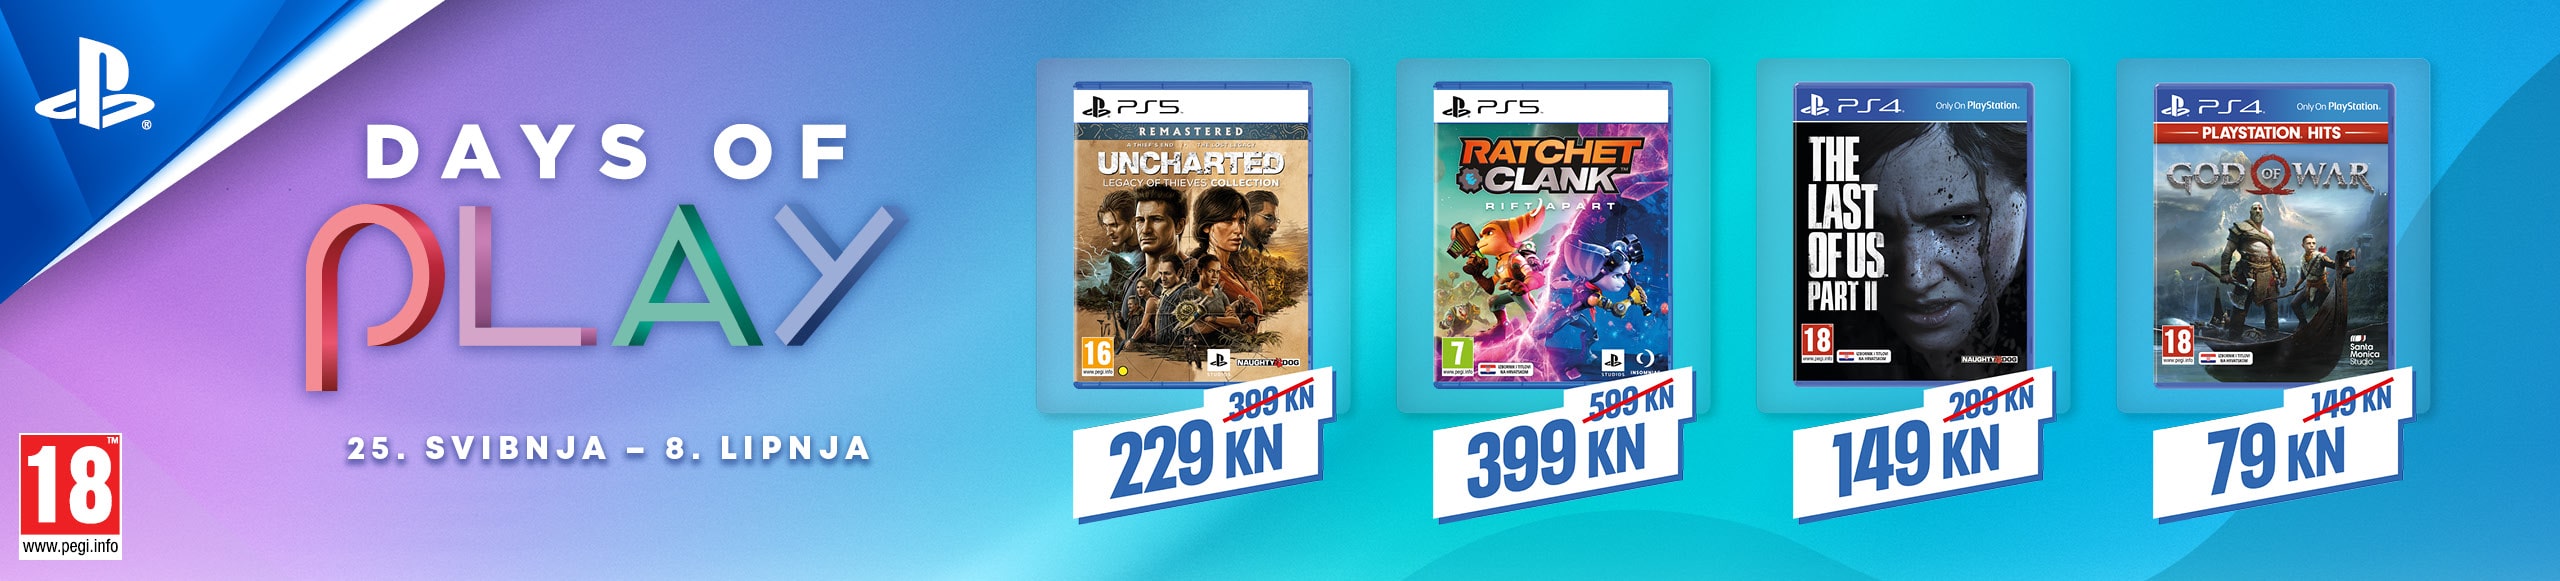 Playstation - Days of play : popusti na PS5 igre